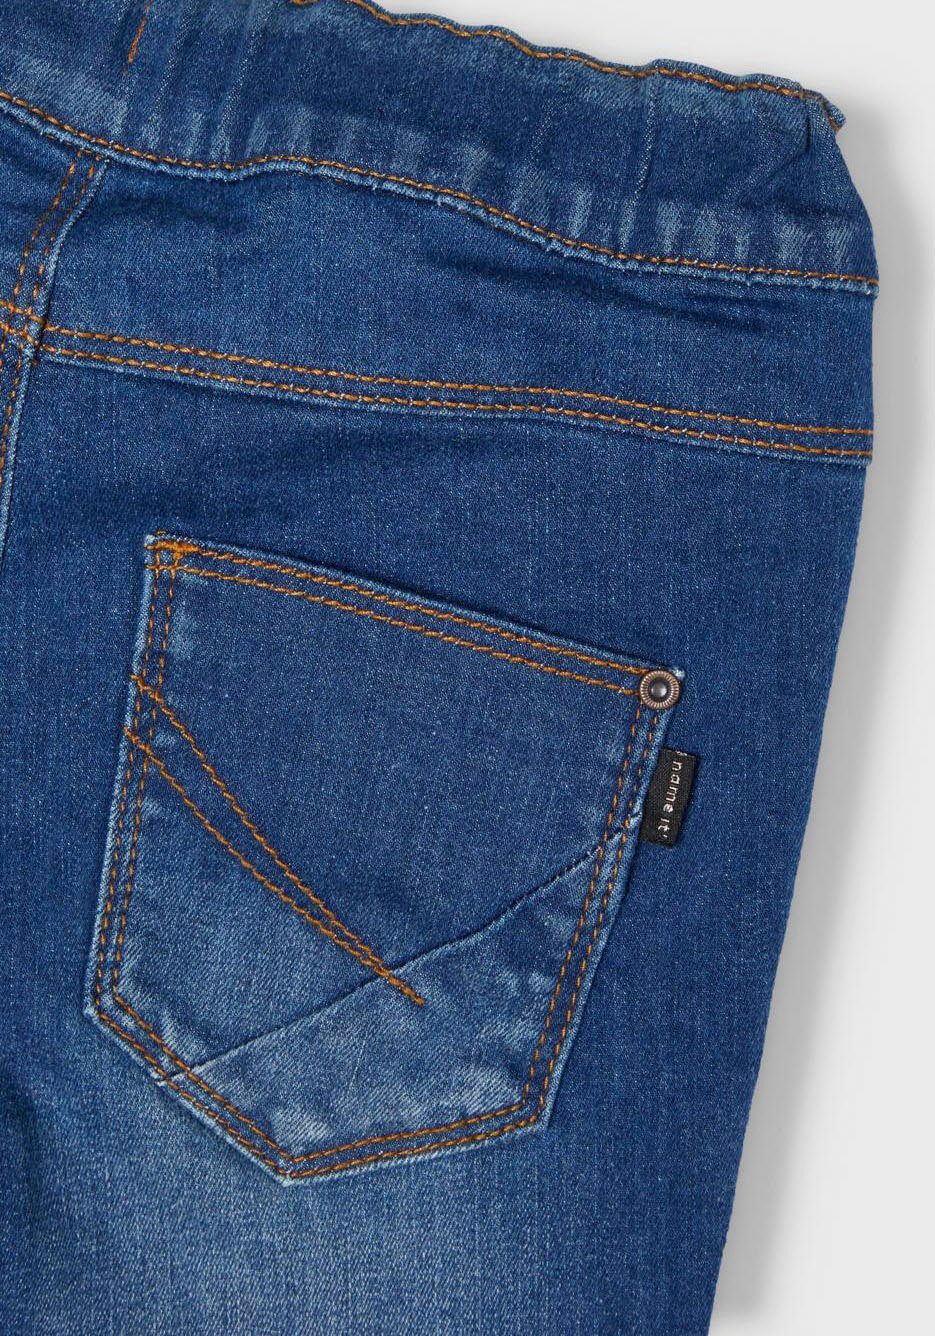 PANT It blue Stretch-Jeans denim NKFPOLLY medium DNMATASI Name